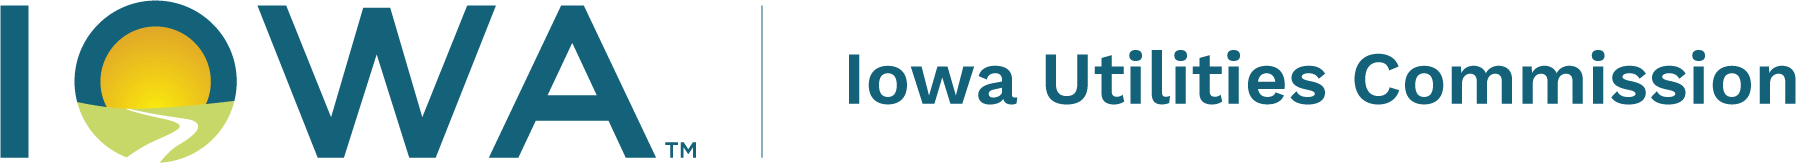 Iowa Utilities Commission logo